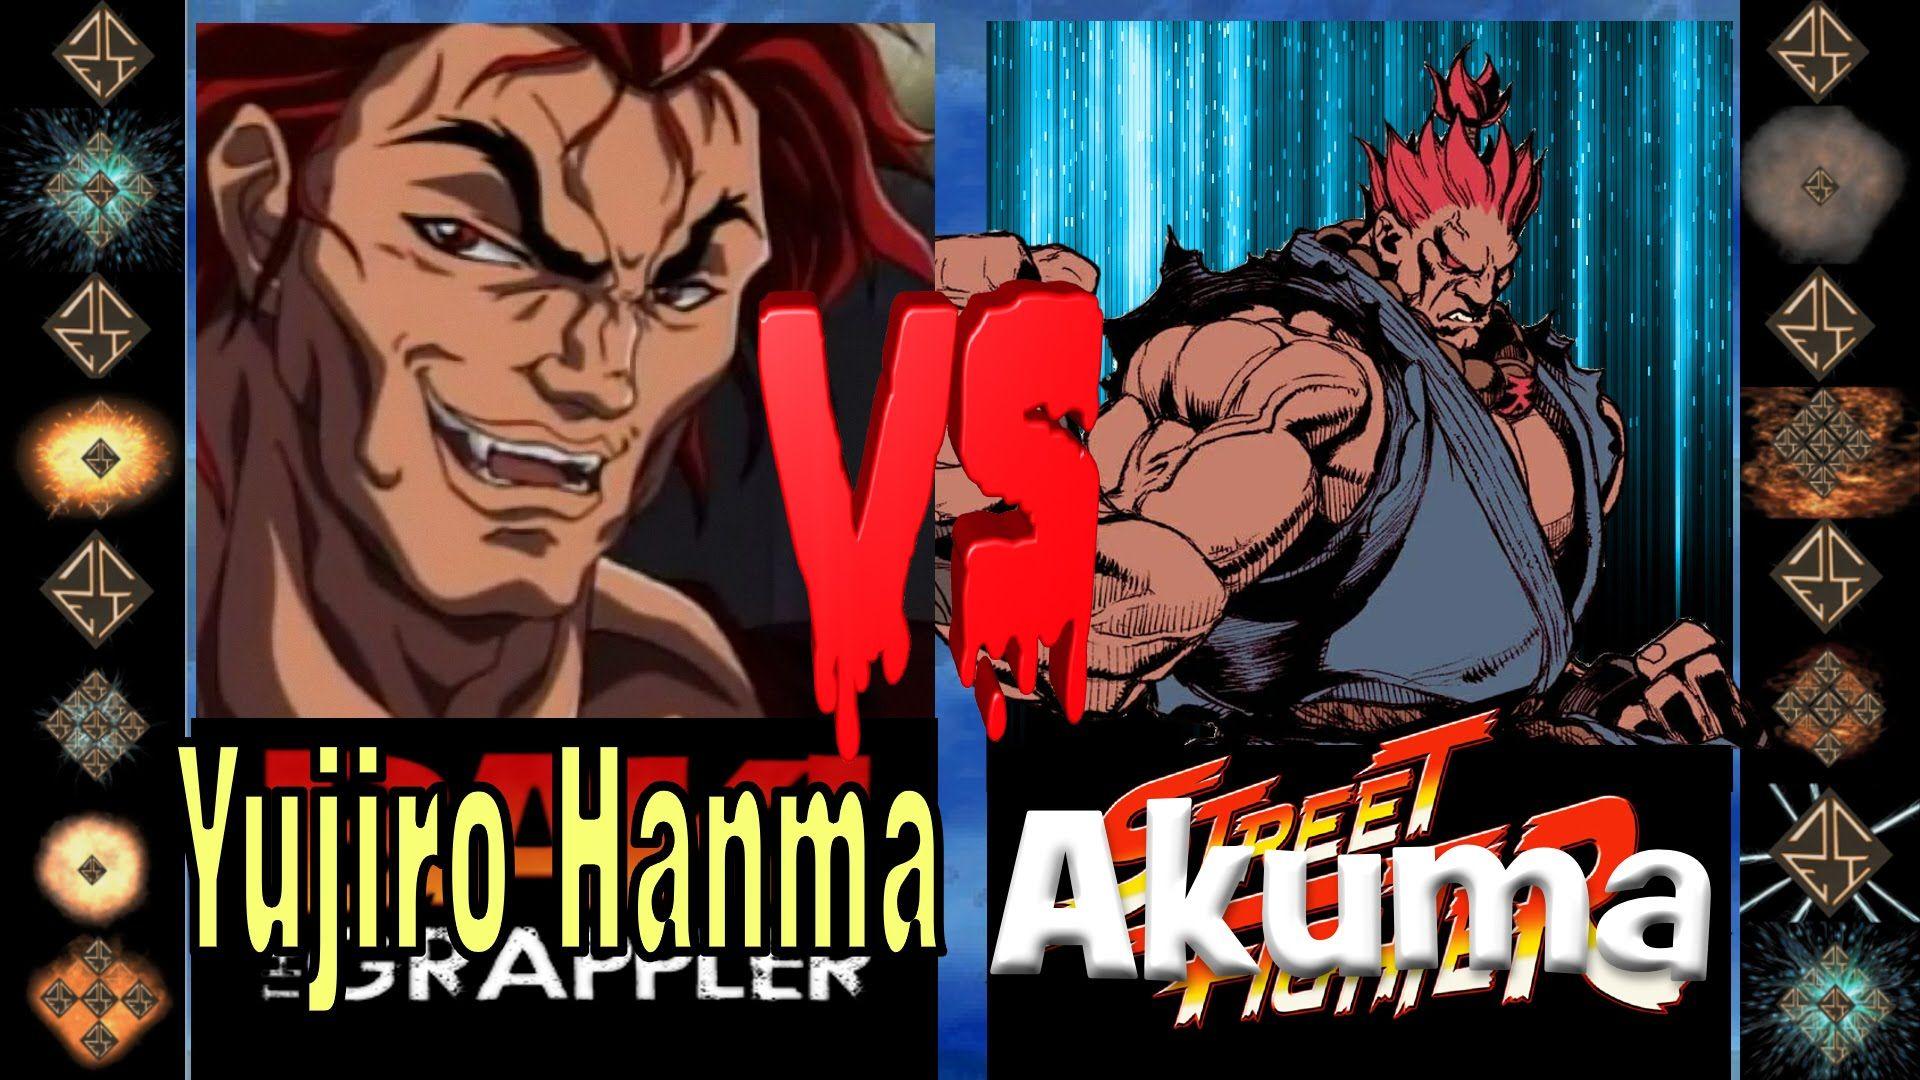 Yujiro Hanma (Baki the Grappler) vs Akuma (Street Fighter